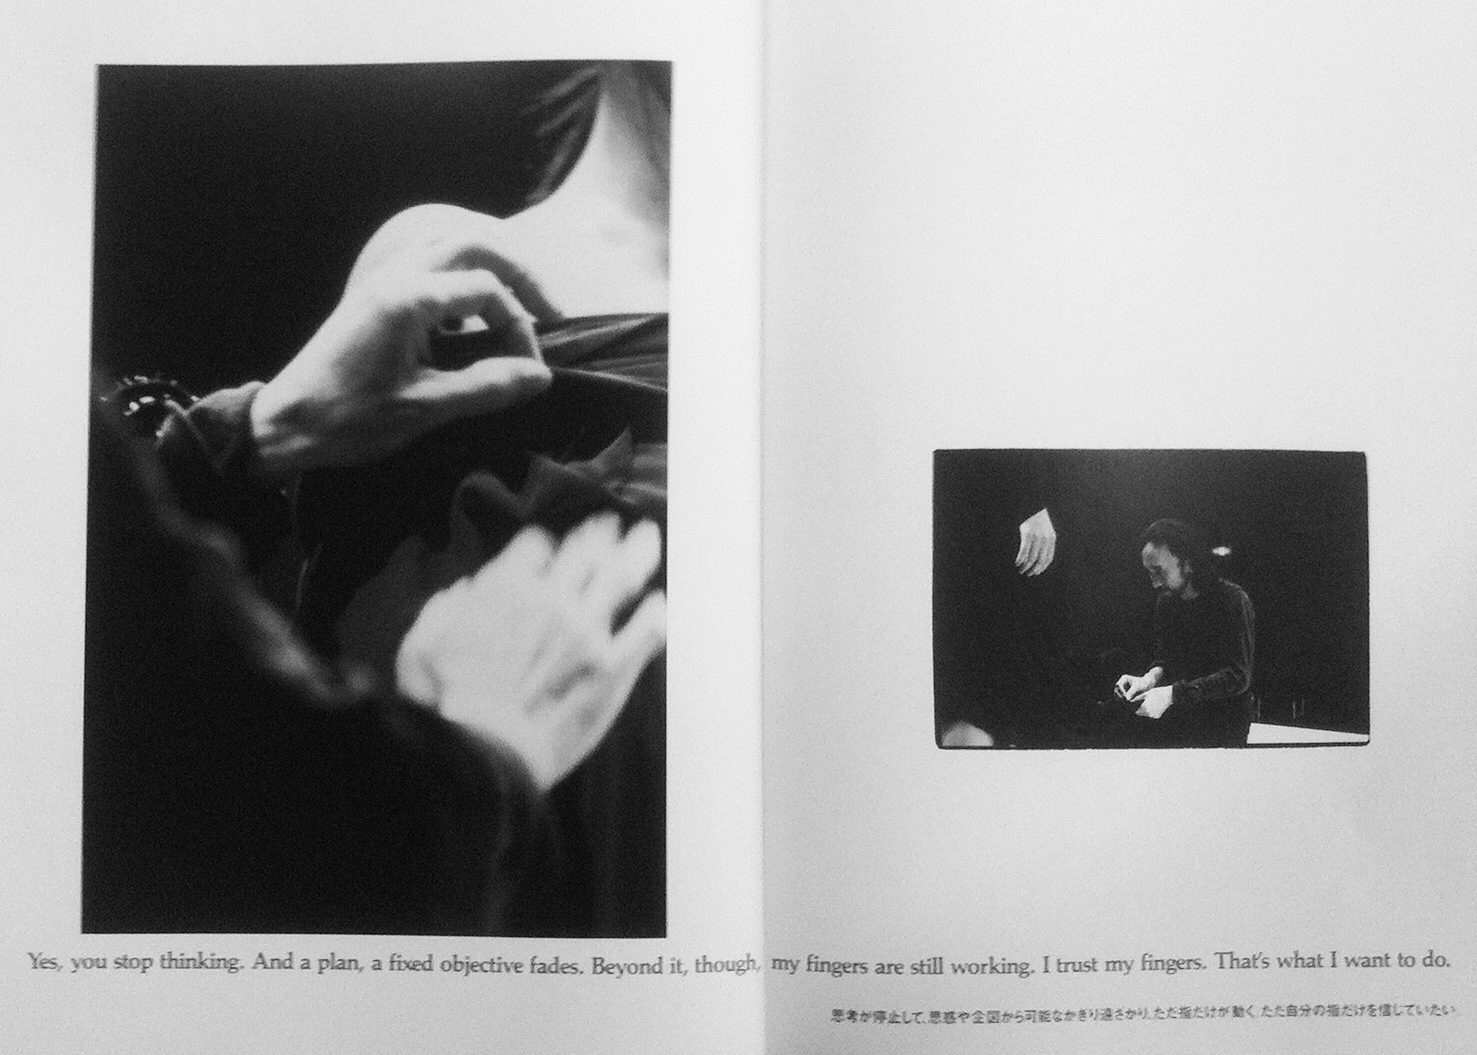  Yohji Yamamoto AW ’91-’92 catalogue. Words, Yohji Yamamoto. Copyright, Yohji Yamamoto.&nbsp;Catalog is held in the Fashion Museum of the Province of Antwerp (MoMu) Archive. Images courtesy MoMu. 